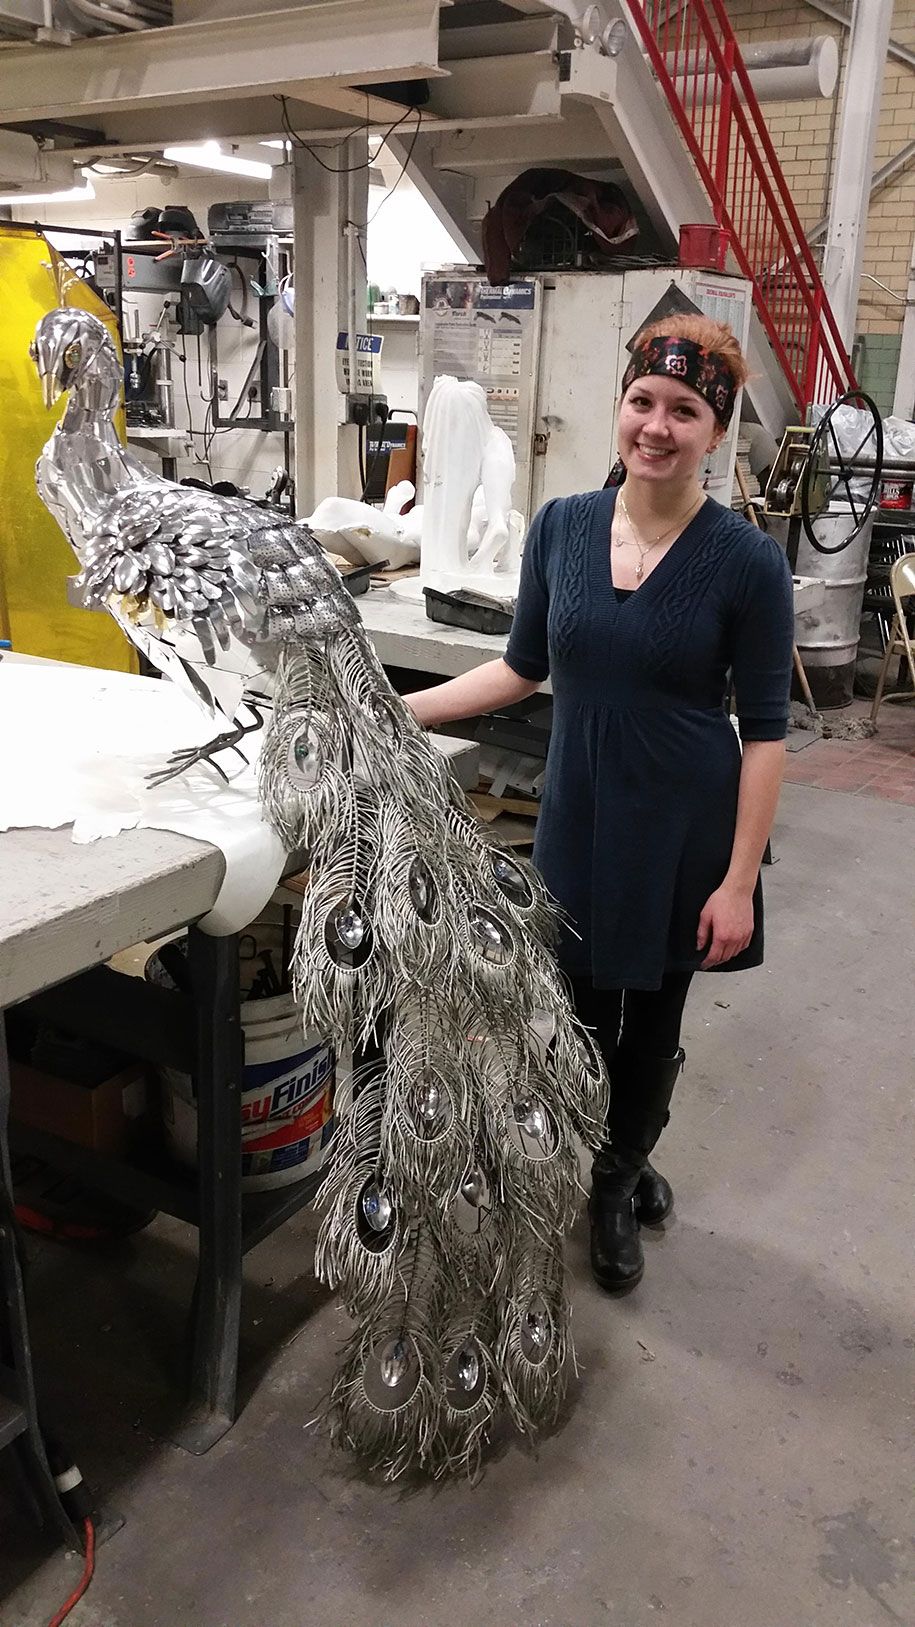 found-object-sculpture-metal-peacock-liddlenomnom-10